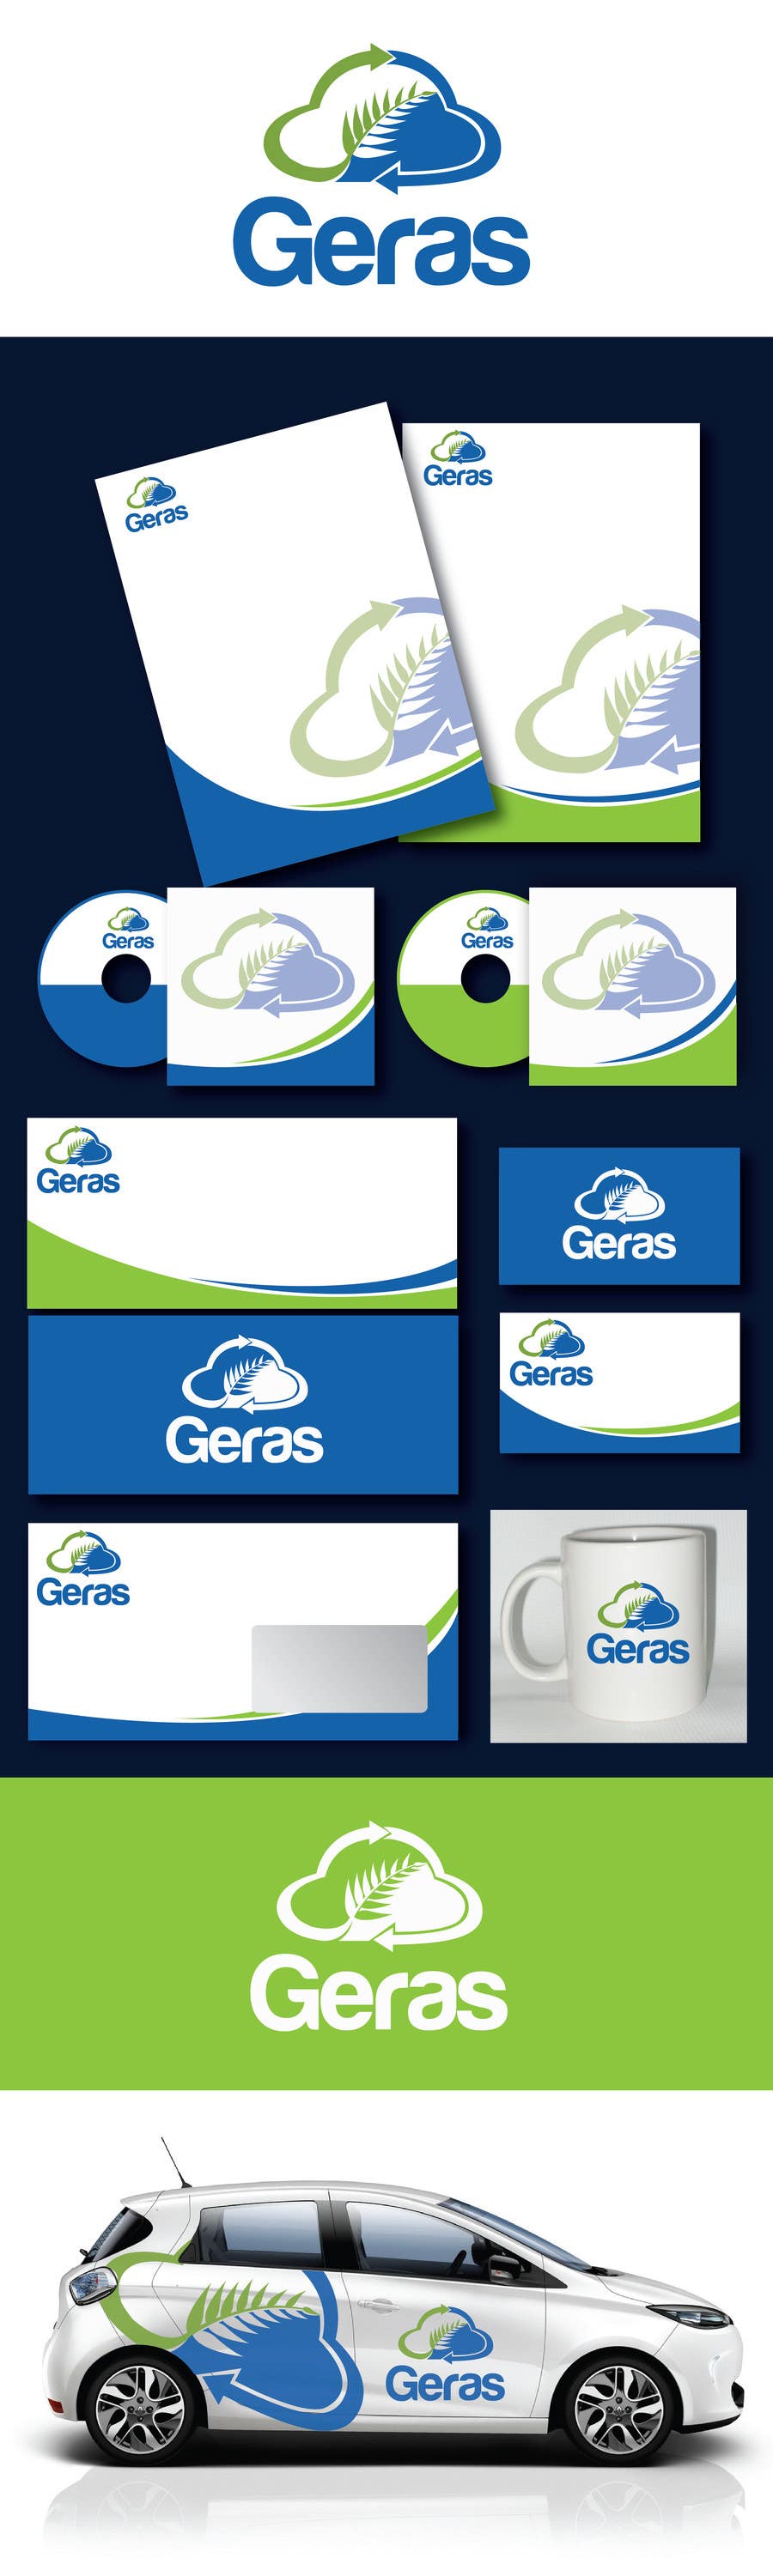 Penyertaan Peraduan #81 untuk                                                 Develop a product logo for Geras (an aged care/rest home management software)
                                            